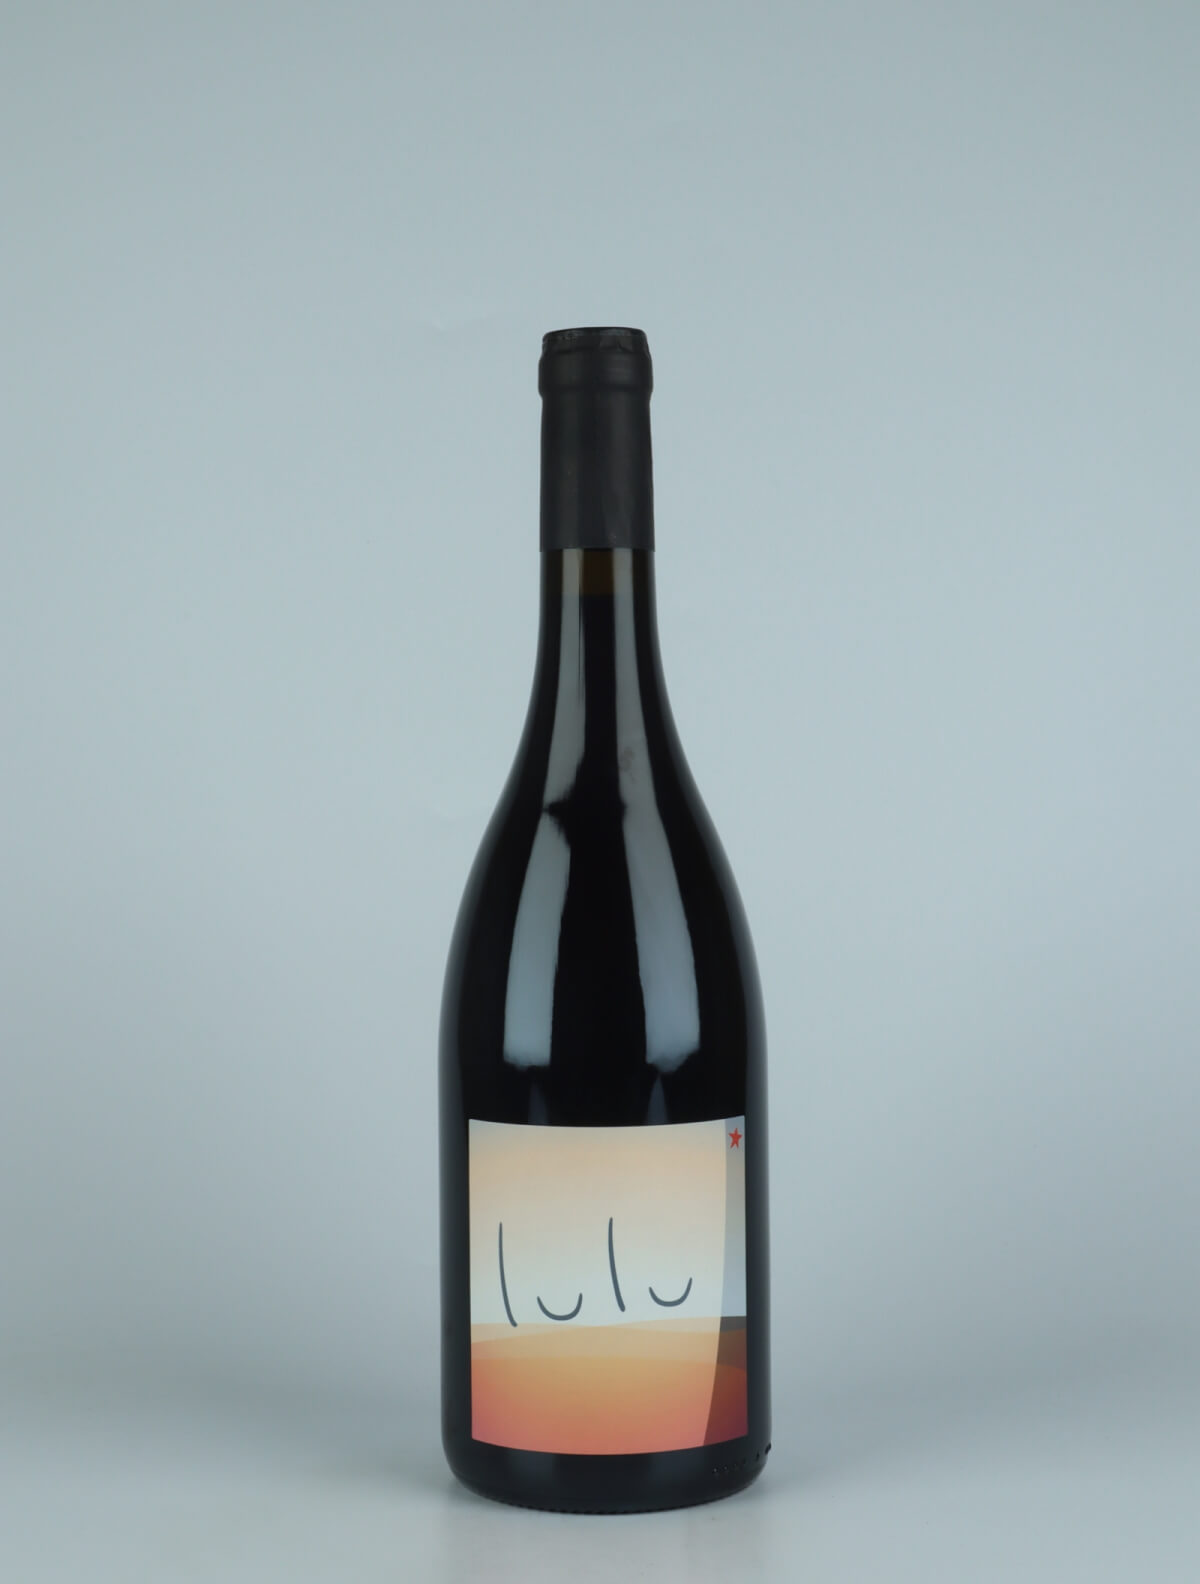 A bottle 2021 Lulu Red wine from Patrick Bouju, Auvergne in France